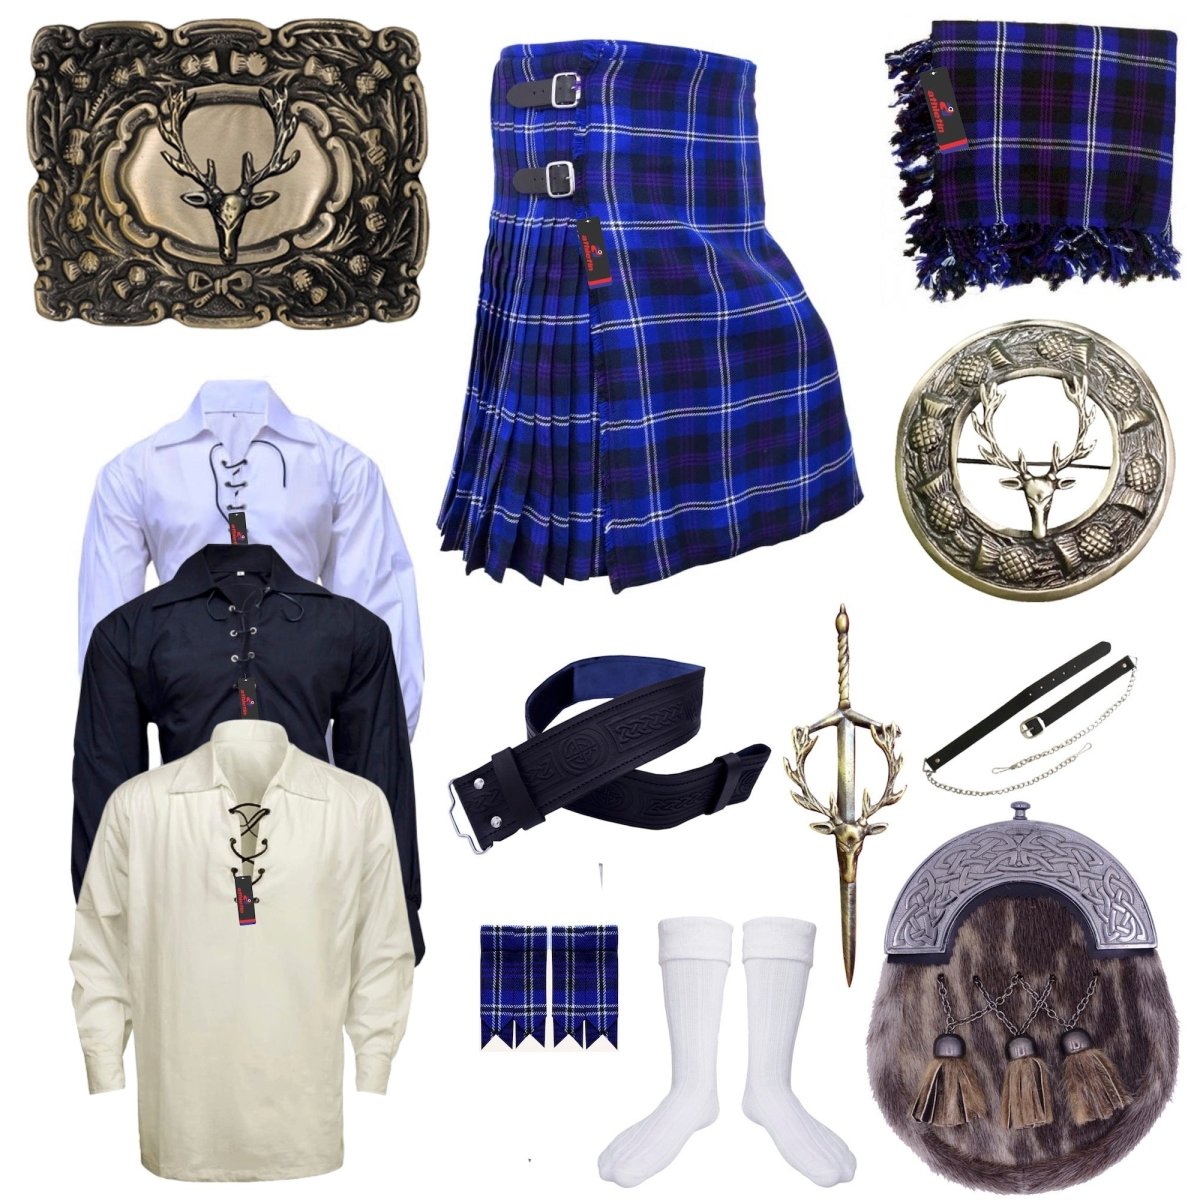 Heritage of Scotland Tartan Kilt Outfit